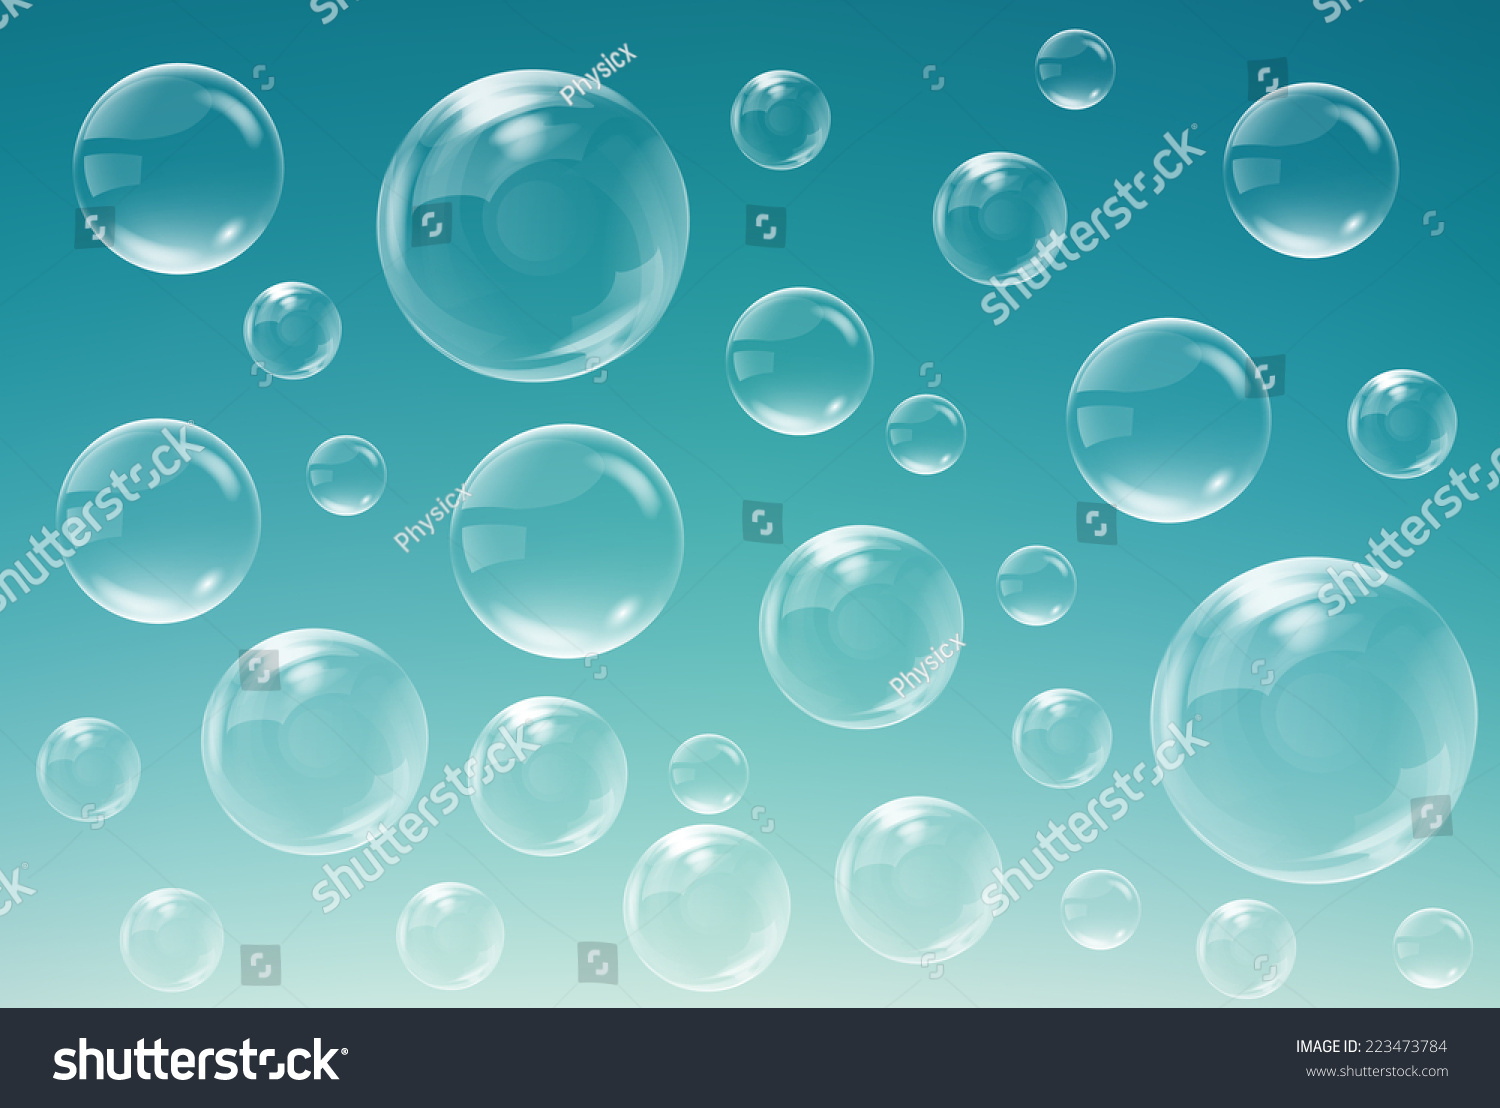 Picture of bubbles.